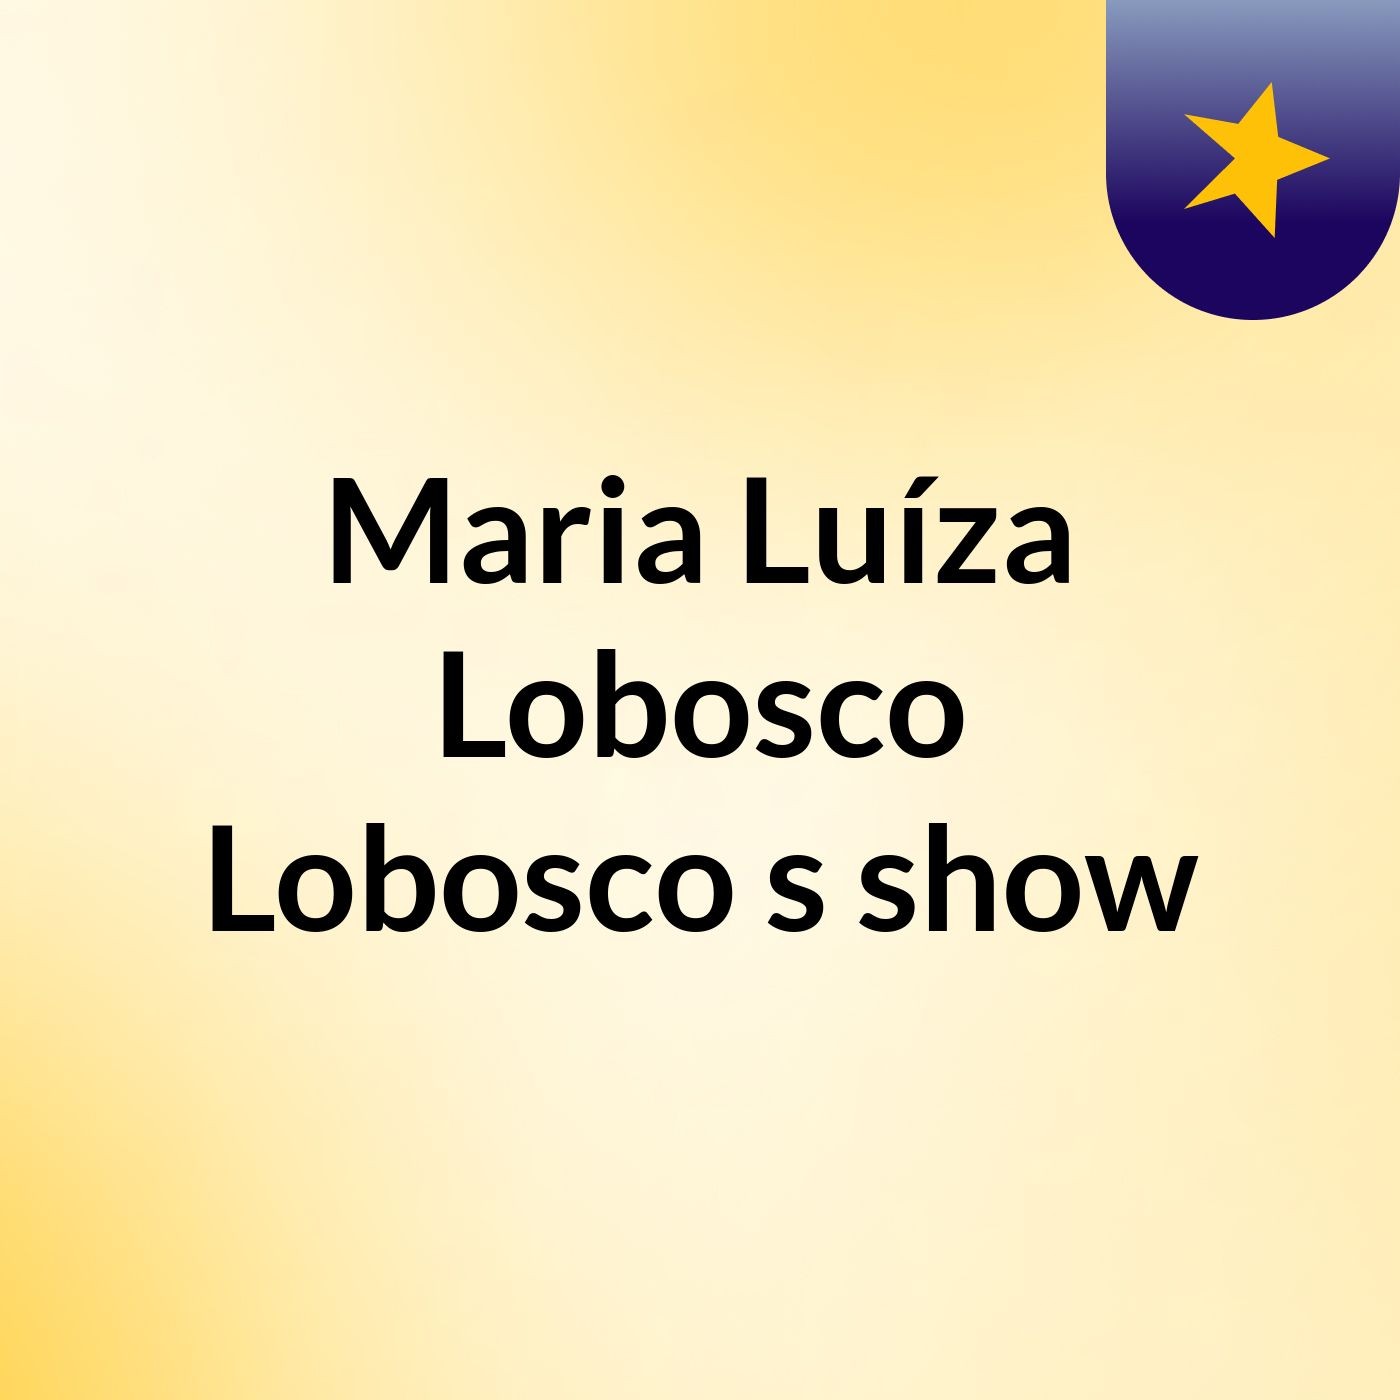 Maria Luíza Lobosco Lobosco's show